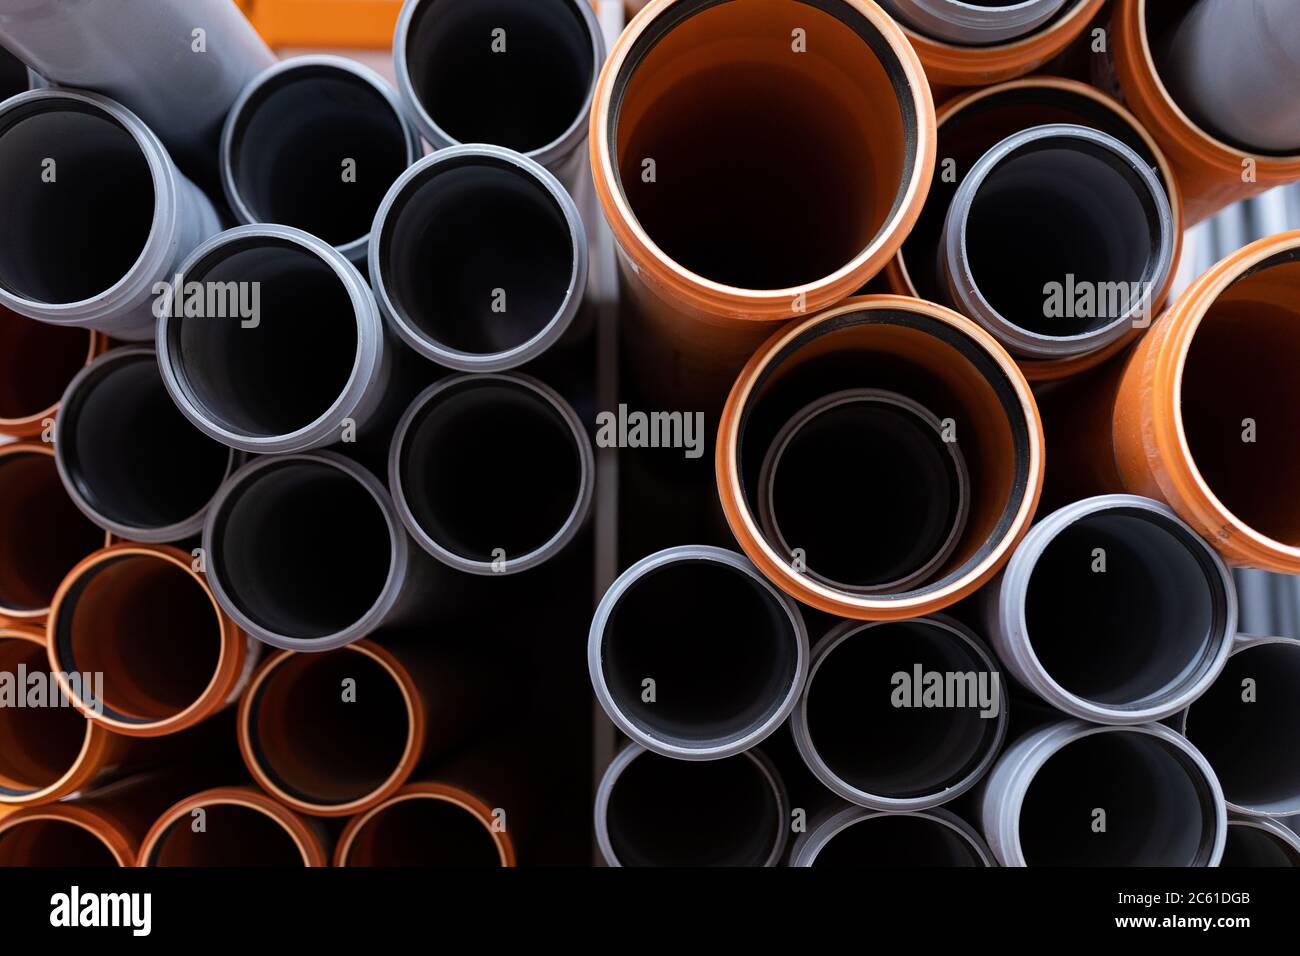 tubos de agua de pvc de primer plano, vista superior Fotografía de stock -  Alamy